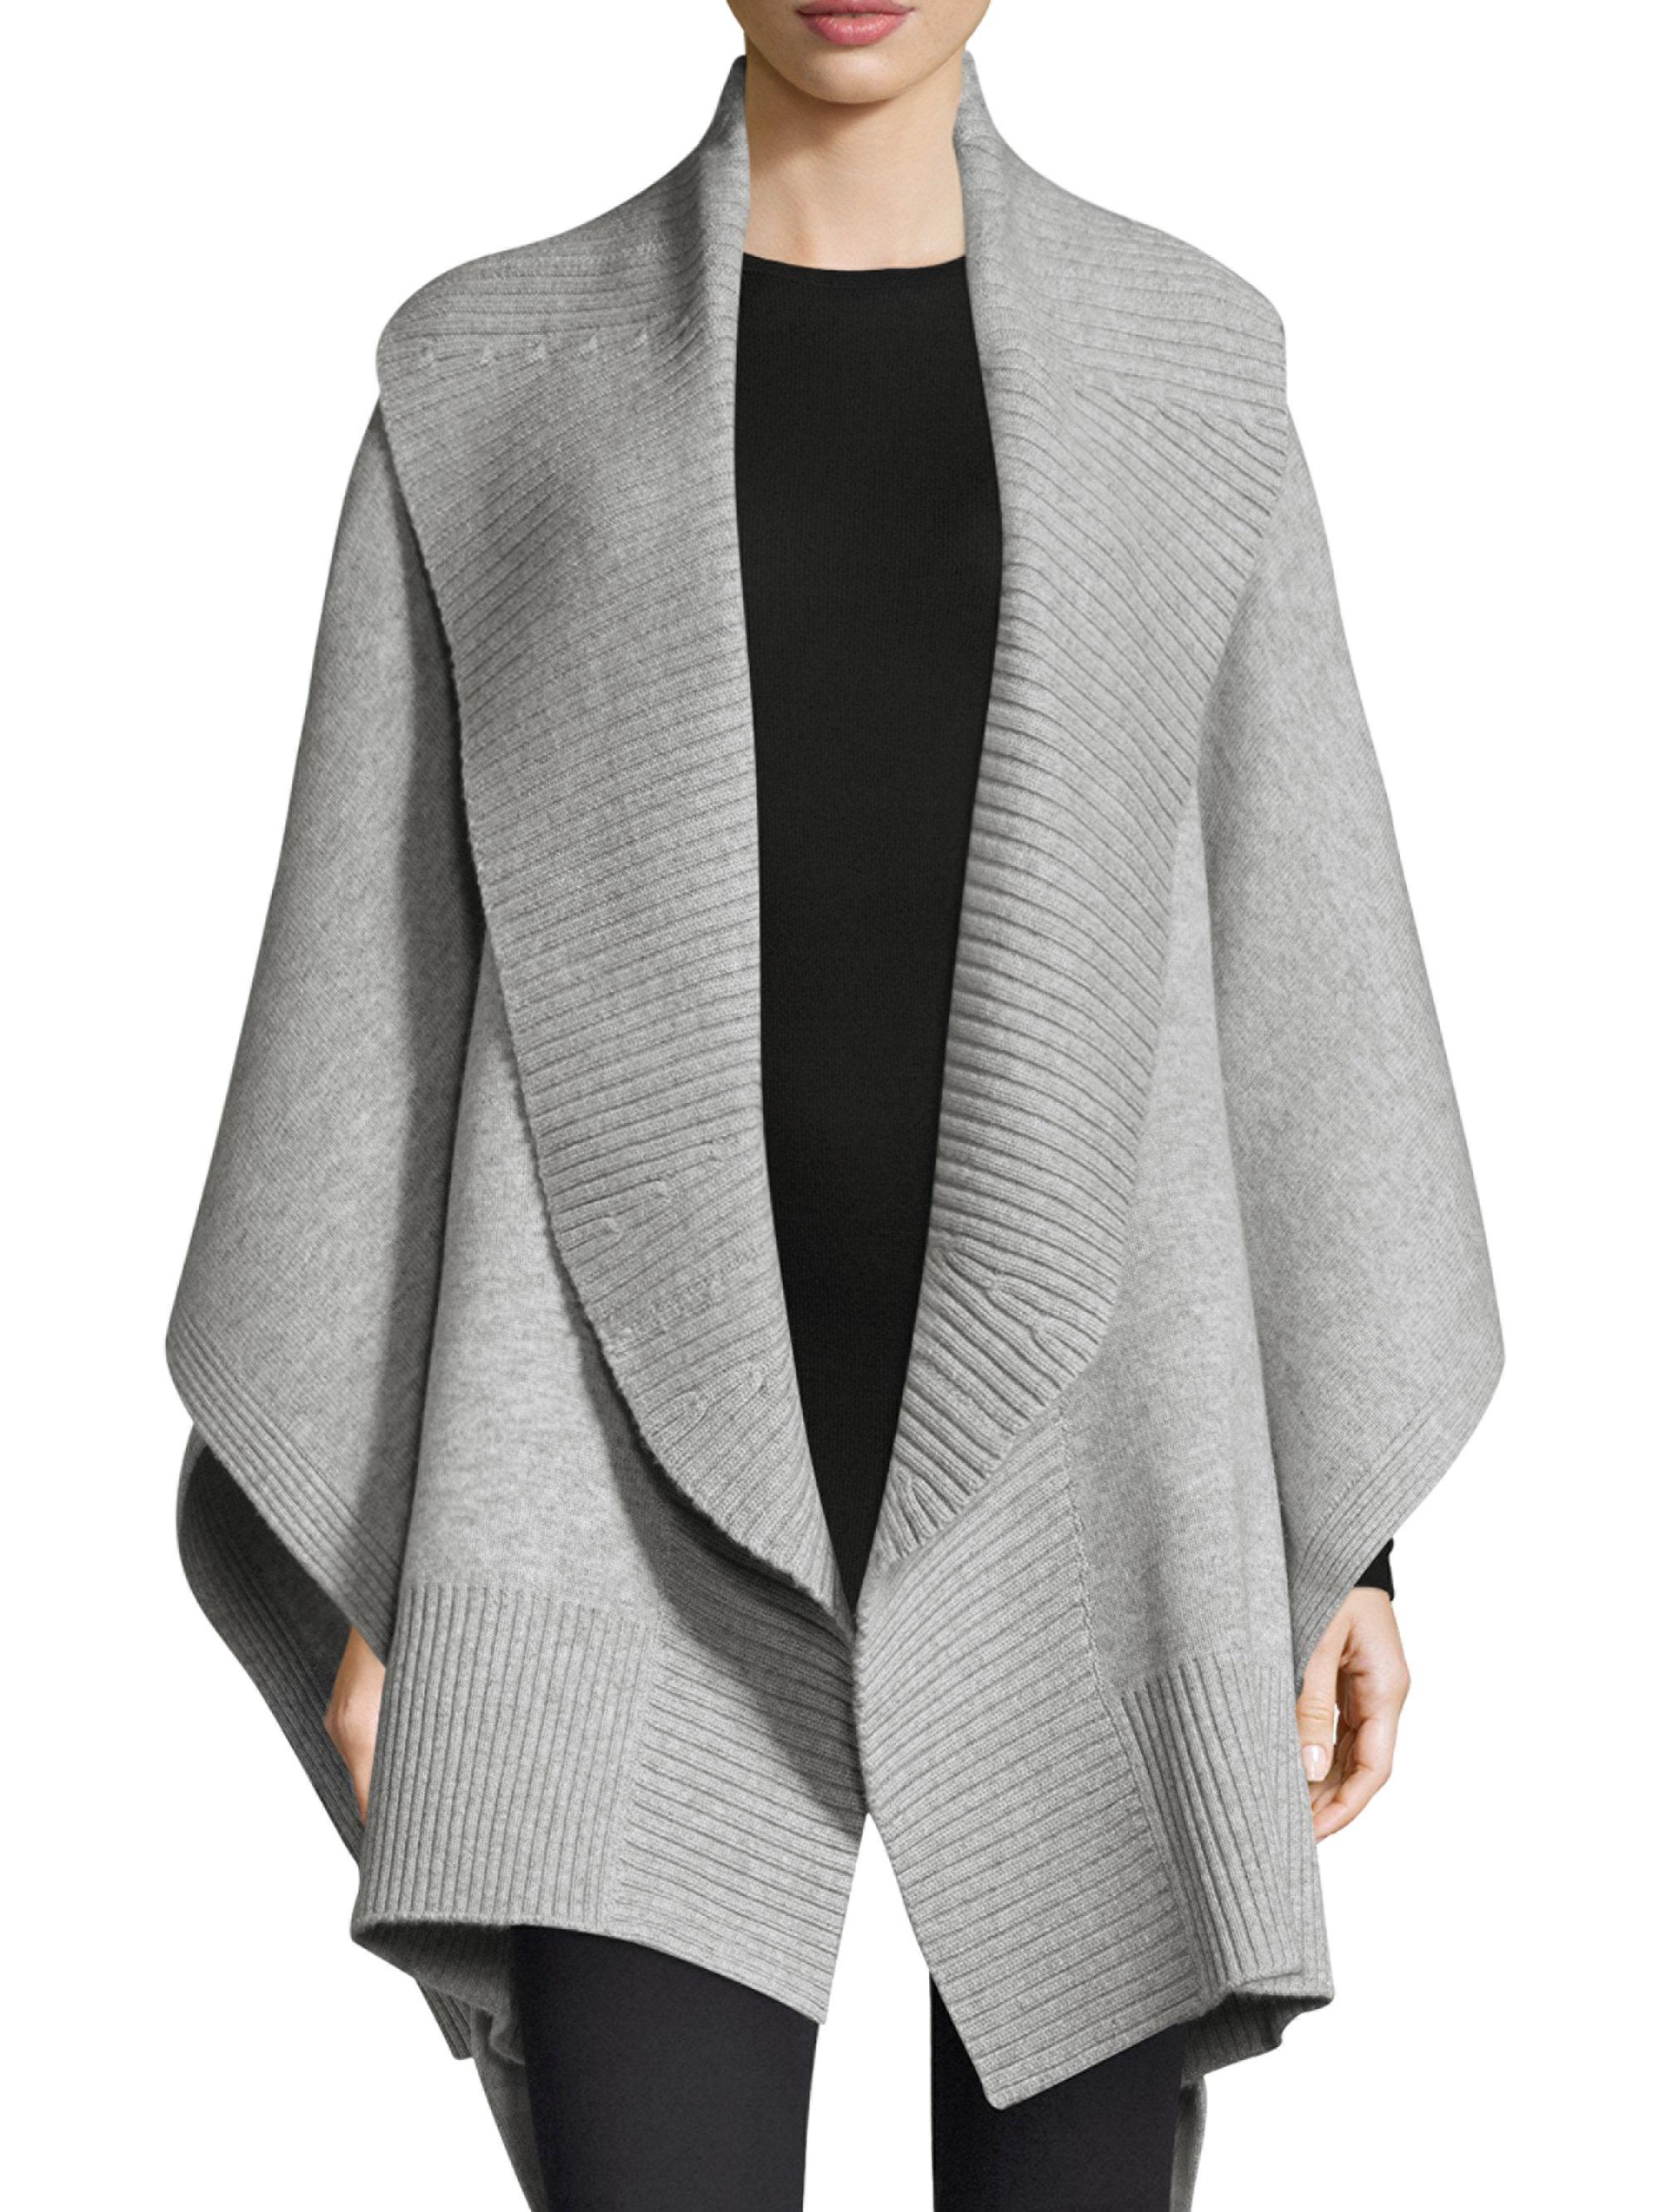 Burberry Wool Ruffle Collar Poncho in Grey (Gray) - Lyst